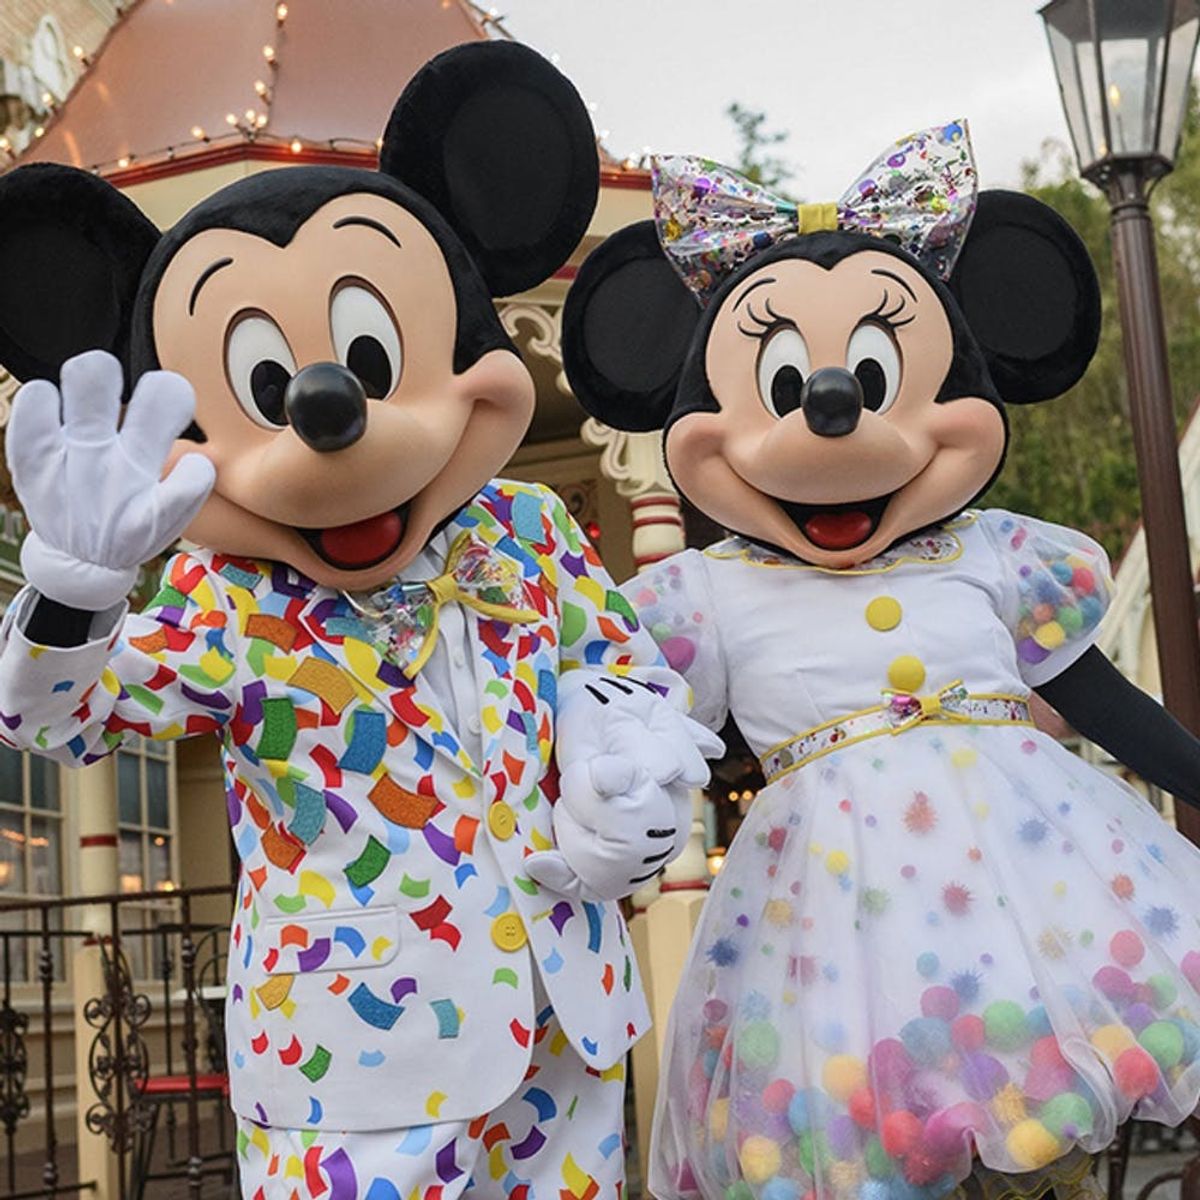 7 Happiest Ways to Celebrate Your Birthday at Disneyland